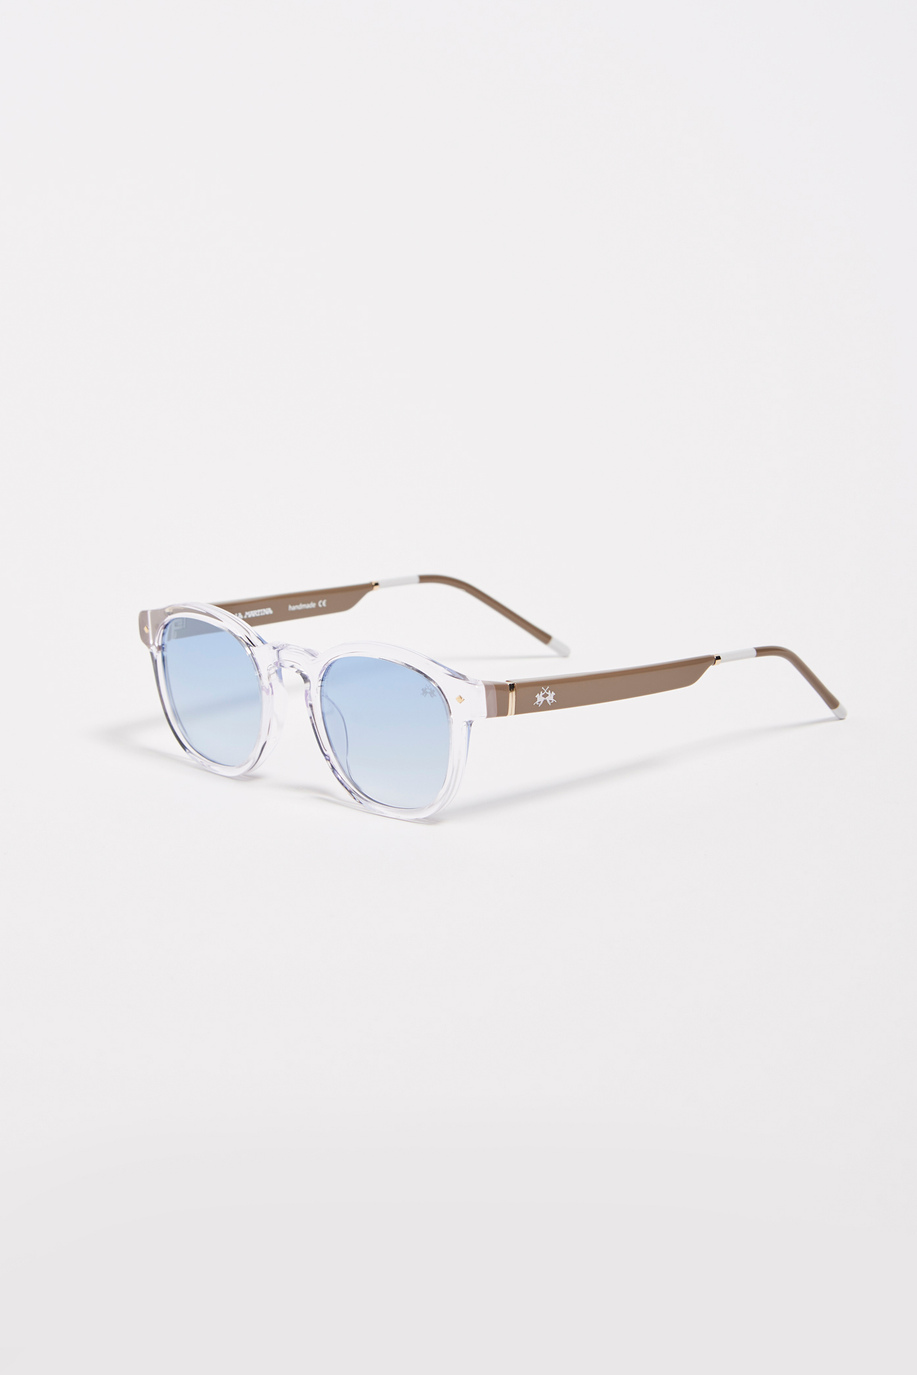 Drop model men's sunglasses - BP + BR + CC (all seasons - never on sale) | La Martina - Official Online Shop